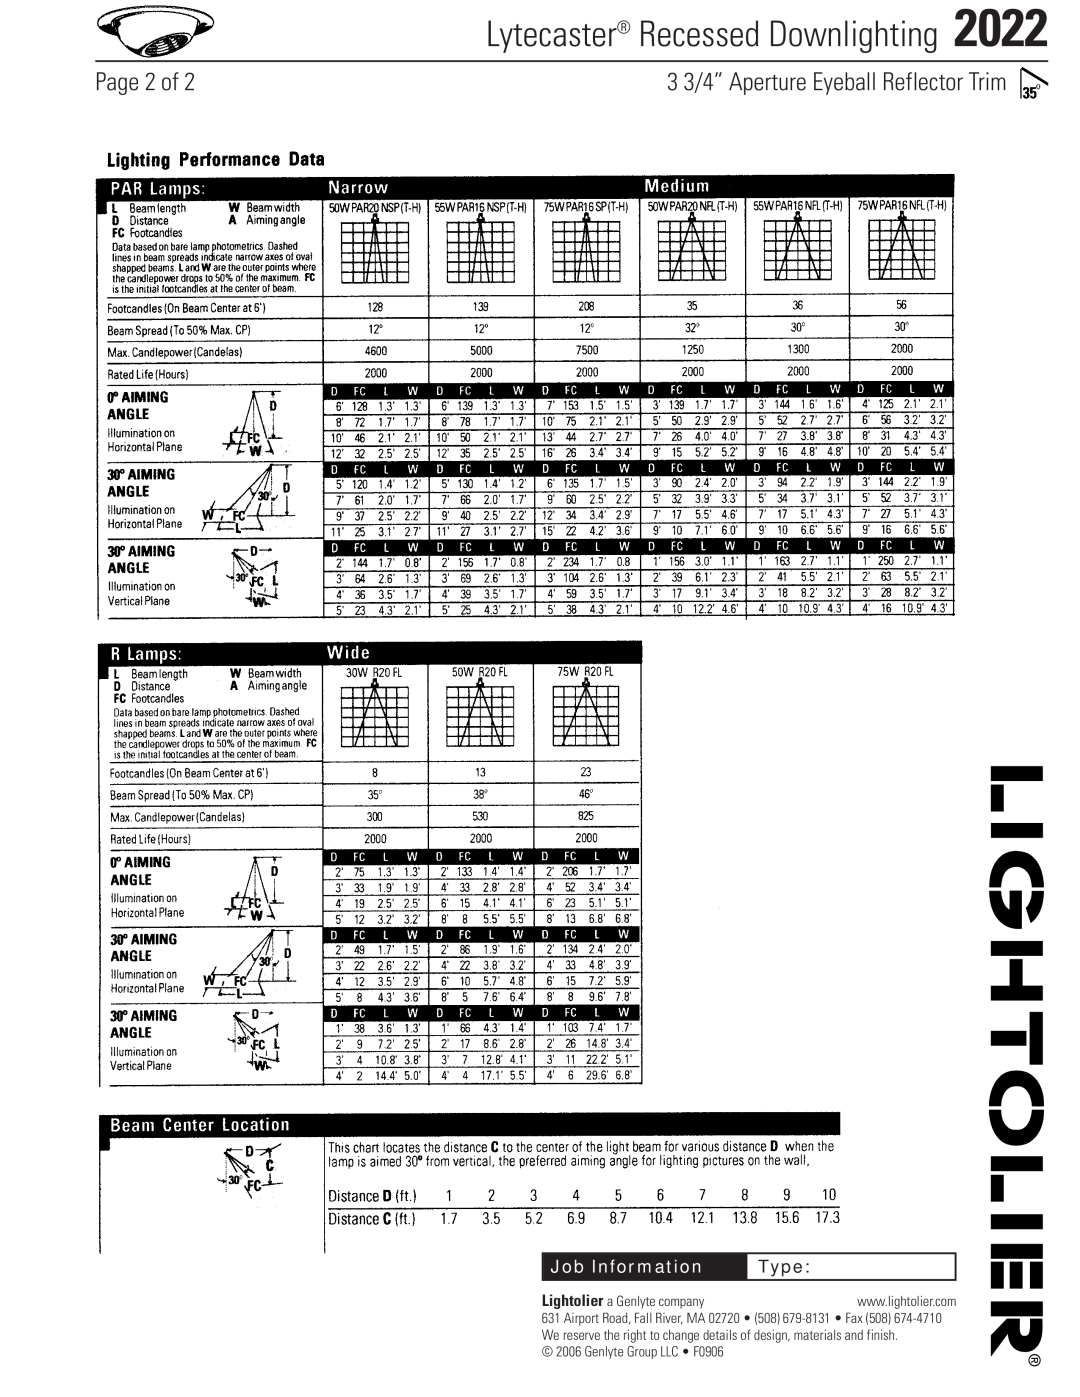 Lightolier 2022 Page 2 of, Lytecaster Recessed Downlighting, 3 3/4” Aperture Eyeball Reflector Trim, Job Information, Type 